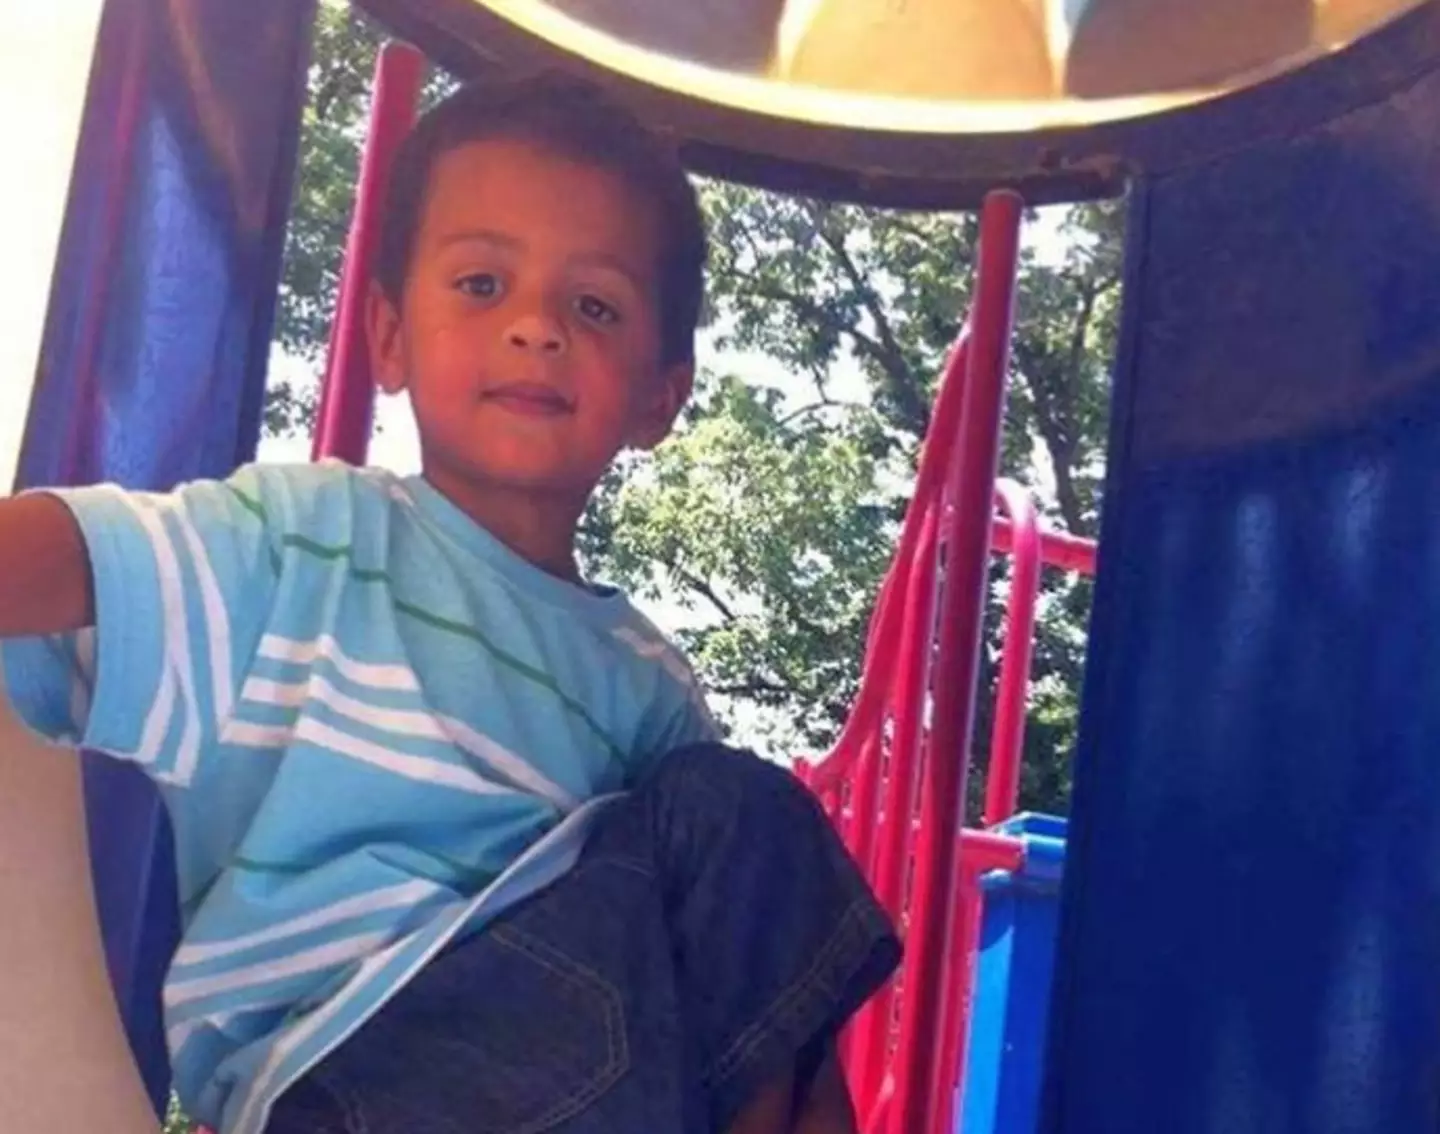 Adrian Jones was seven-years-old when he was killed.